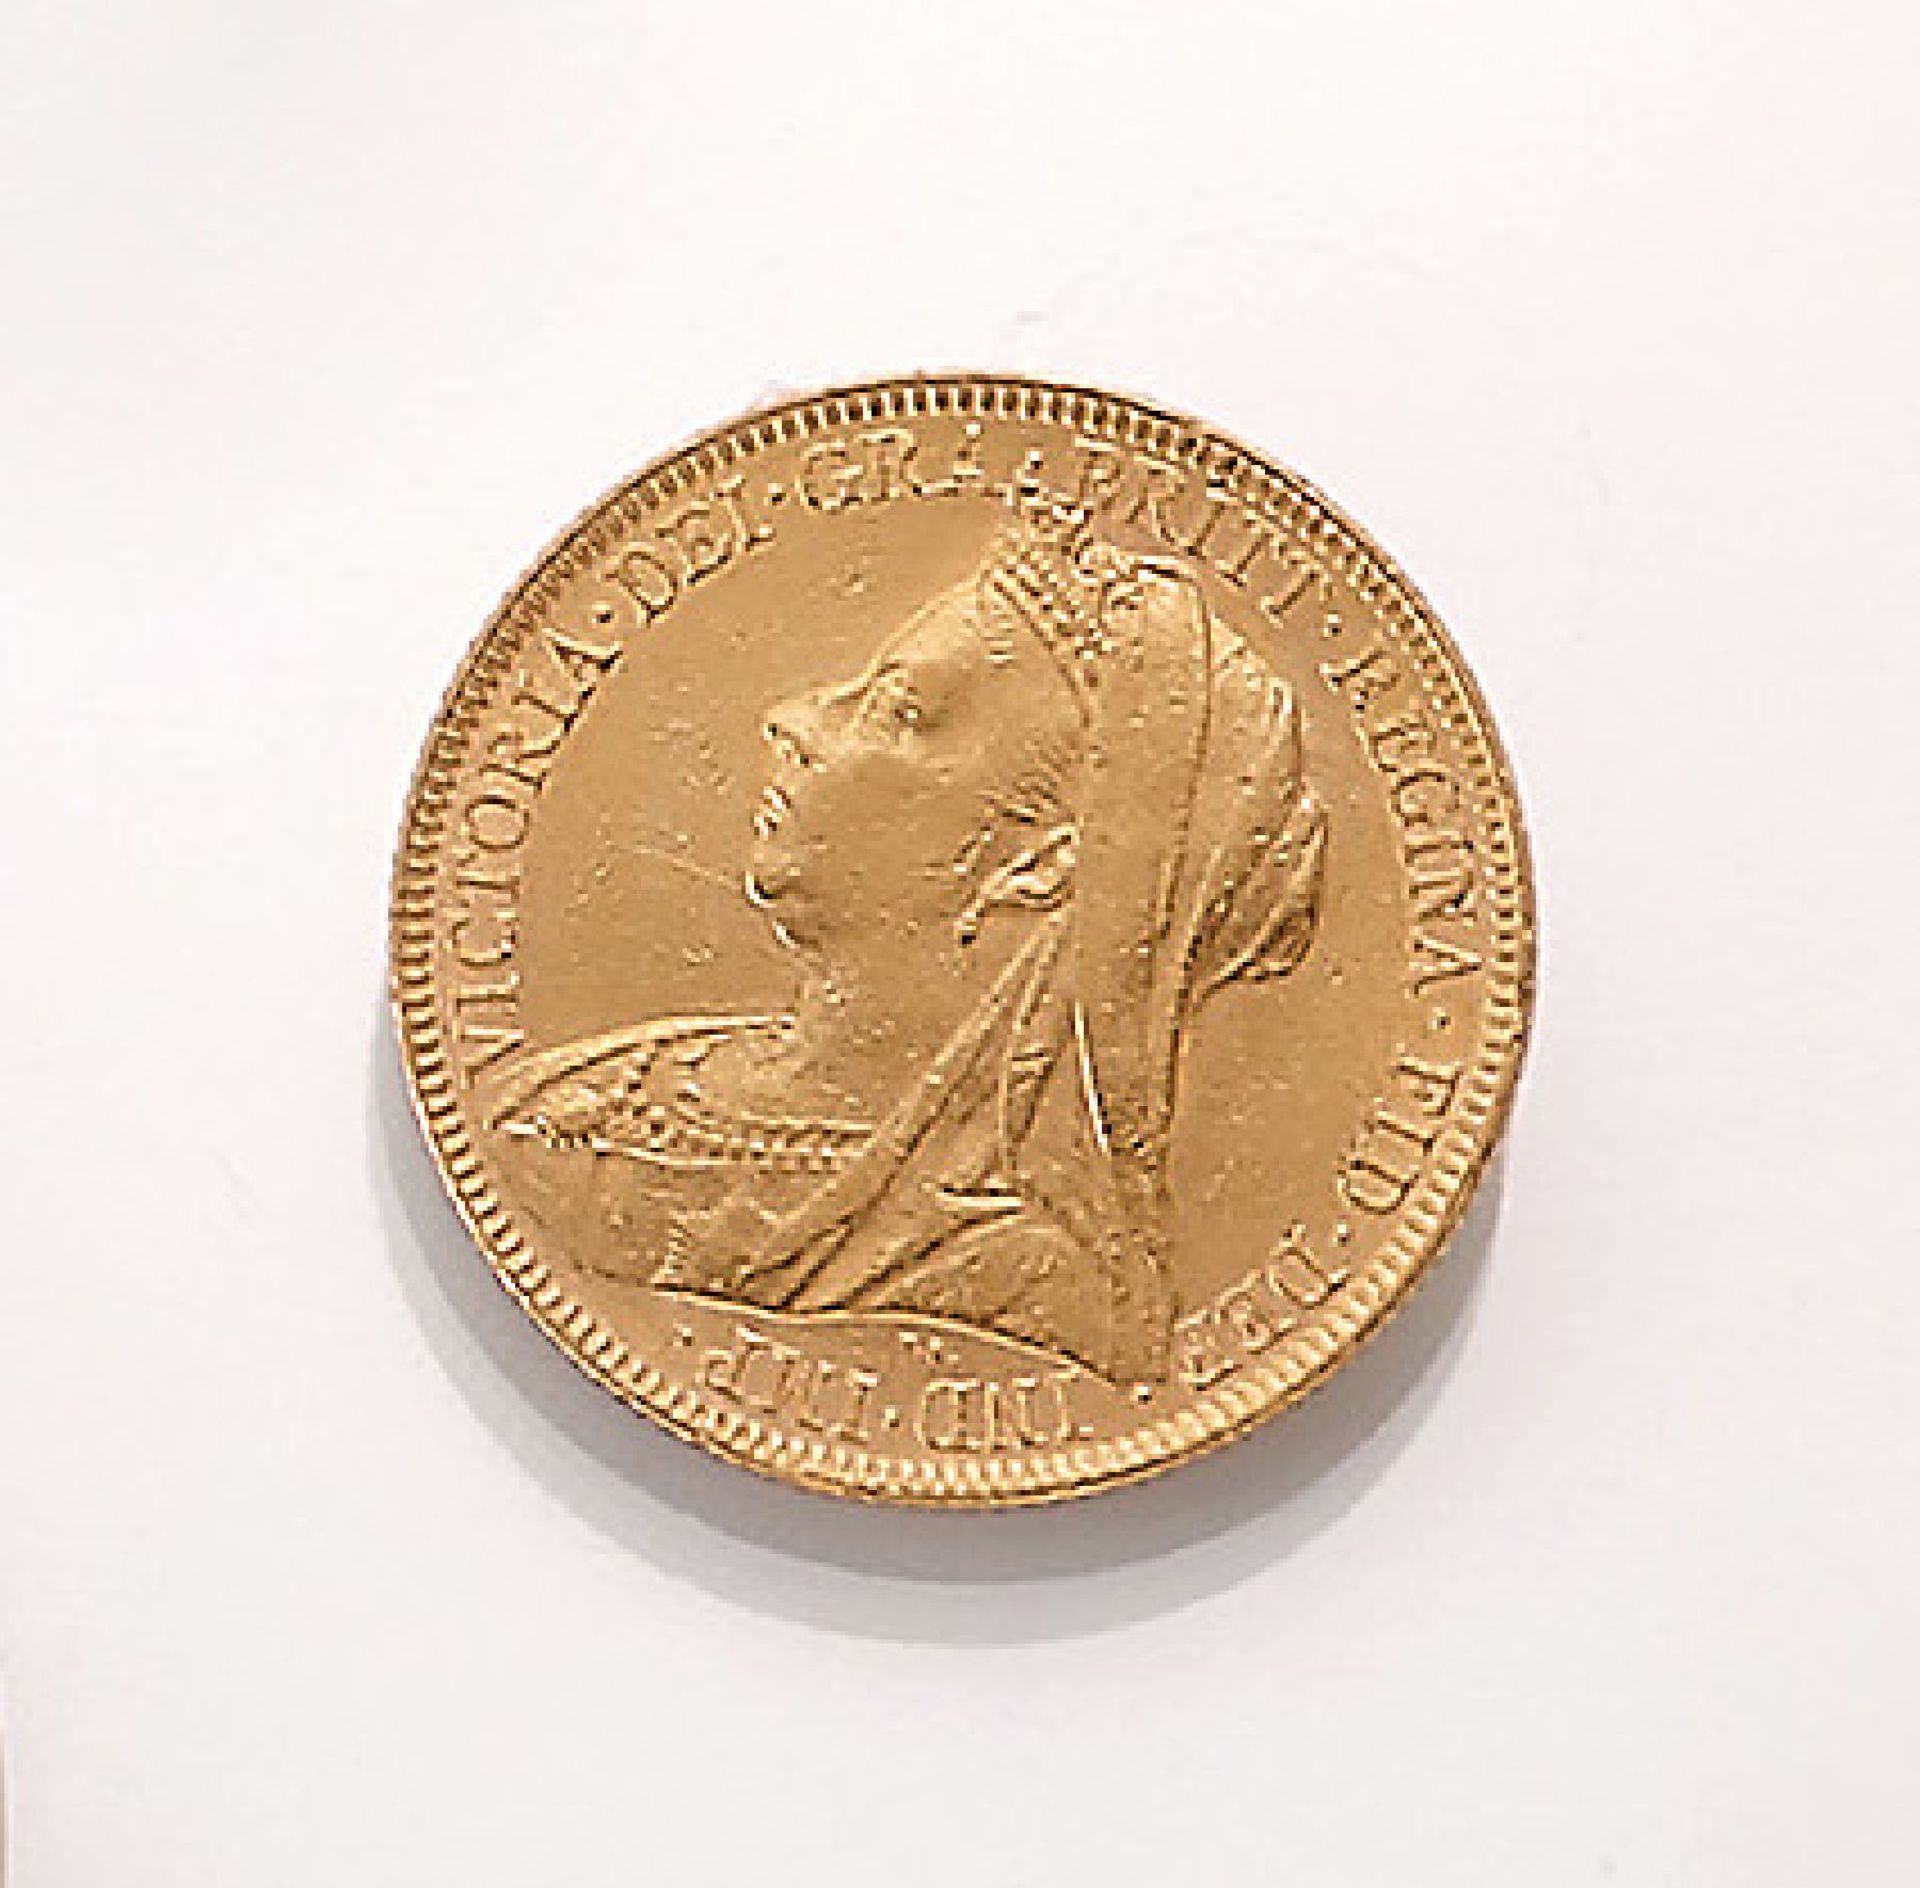 Goldmünze Sovereign, Victoria 1896Gold coin Sovereign, Victoria 1896